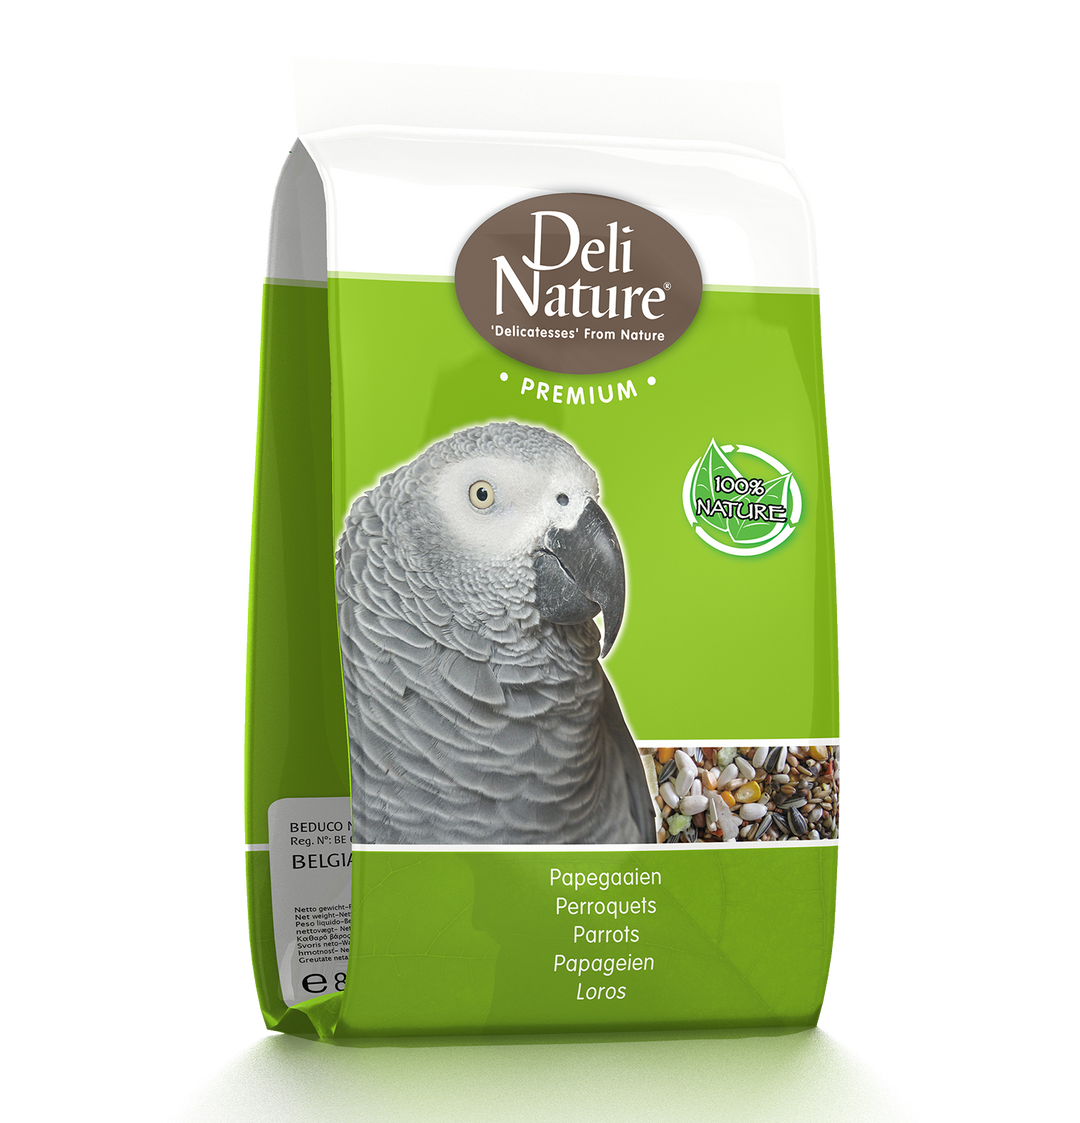 Deli Nature Premium Parrots